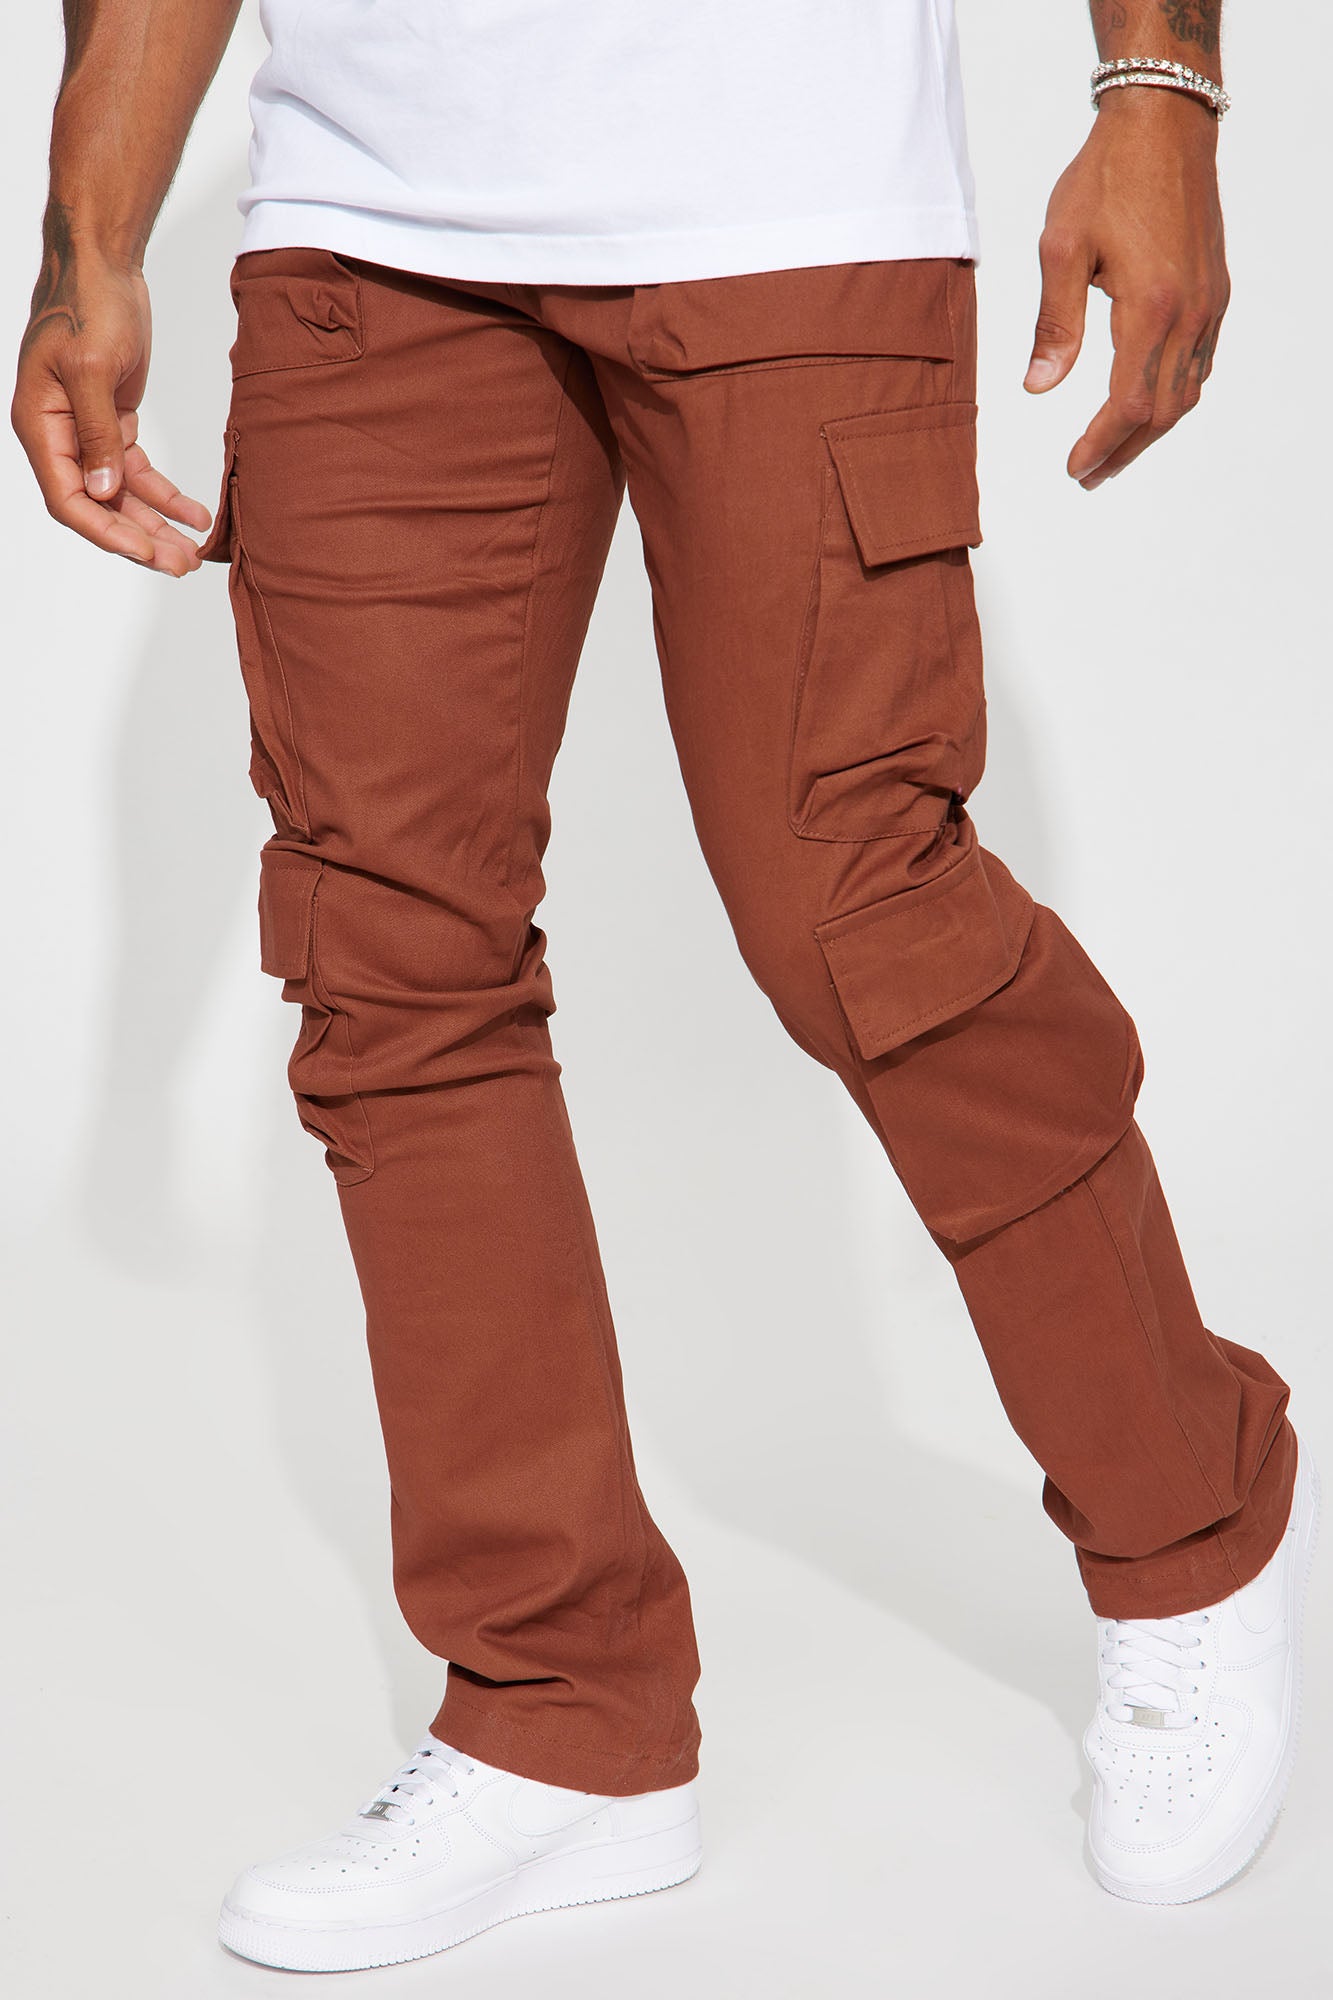 Jeans & Pants | Dark Brown Cargo Pants For Men | Freeup